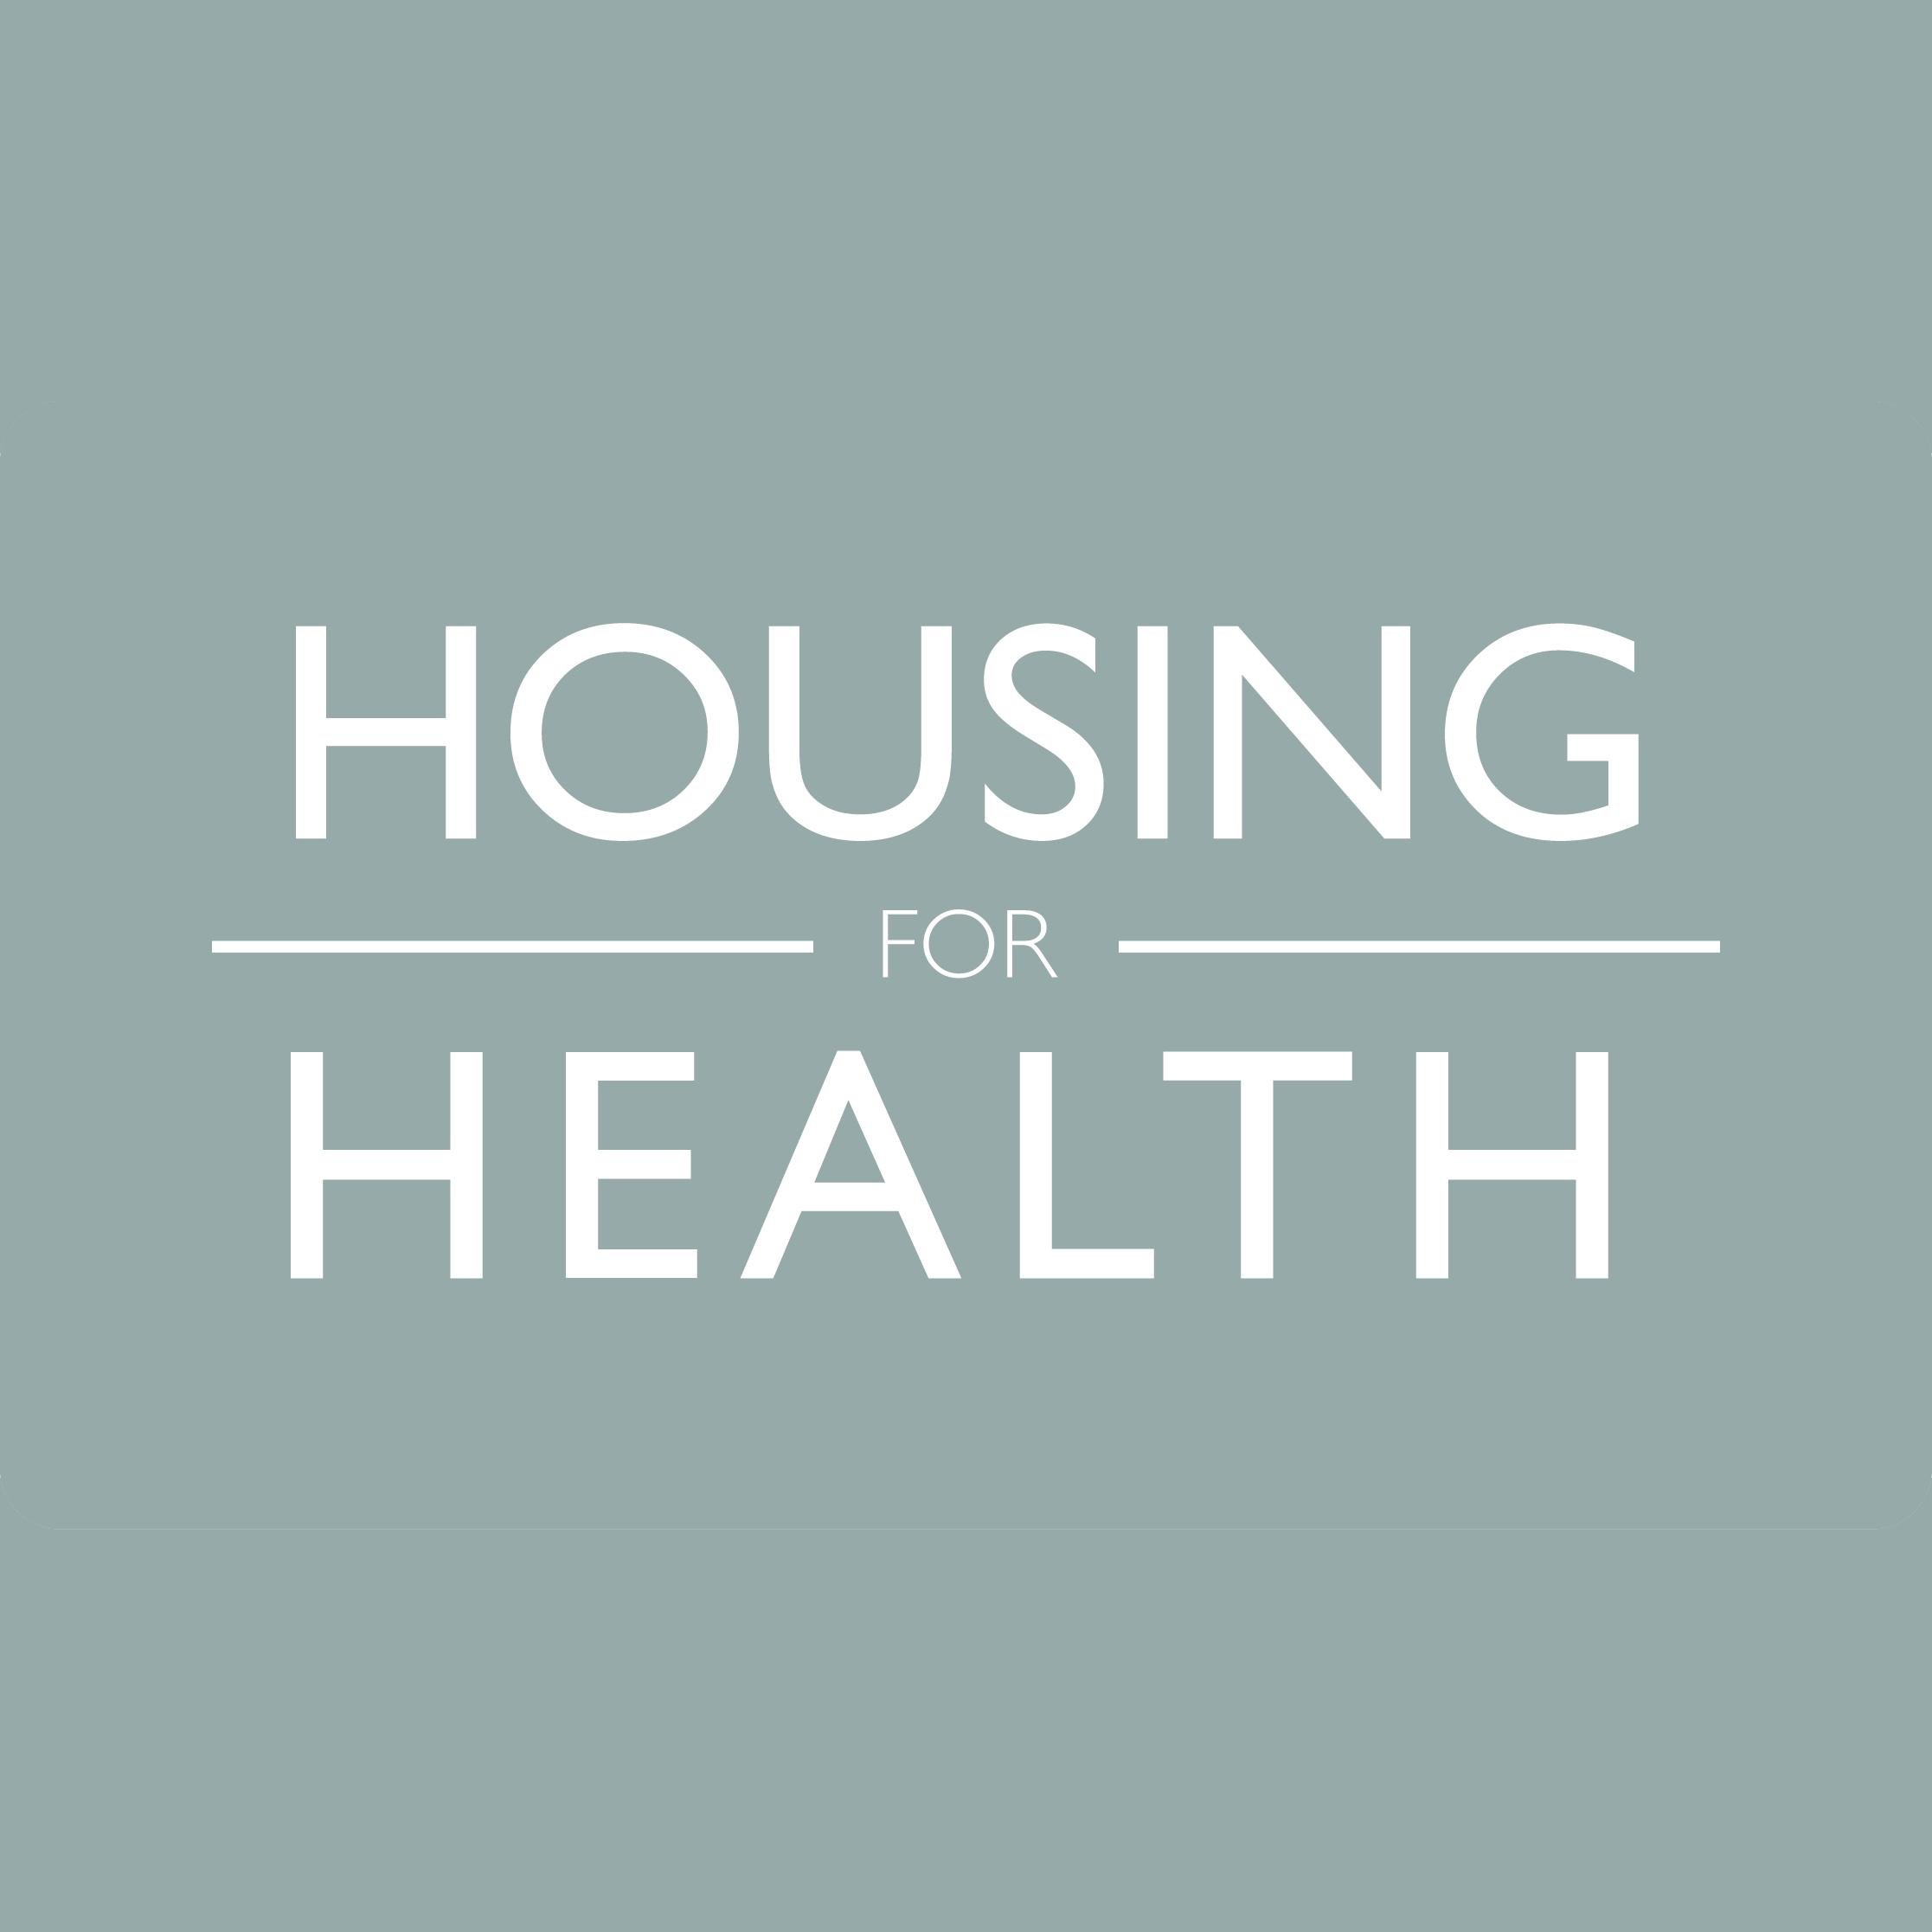 Housing for health